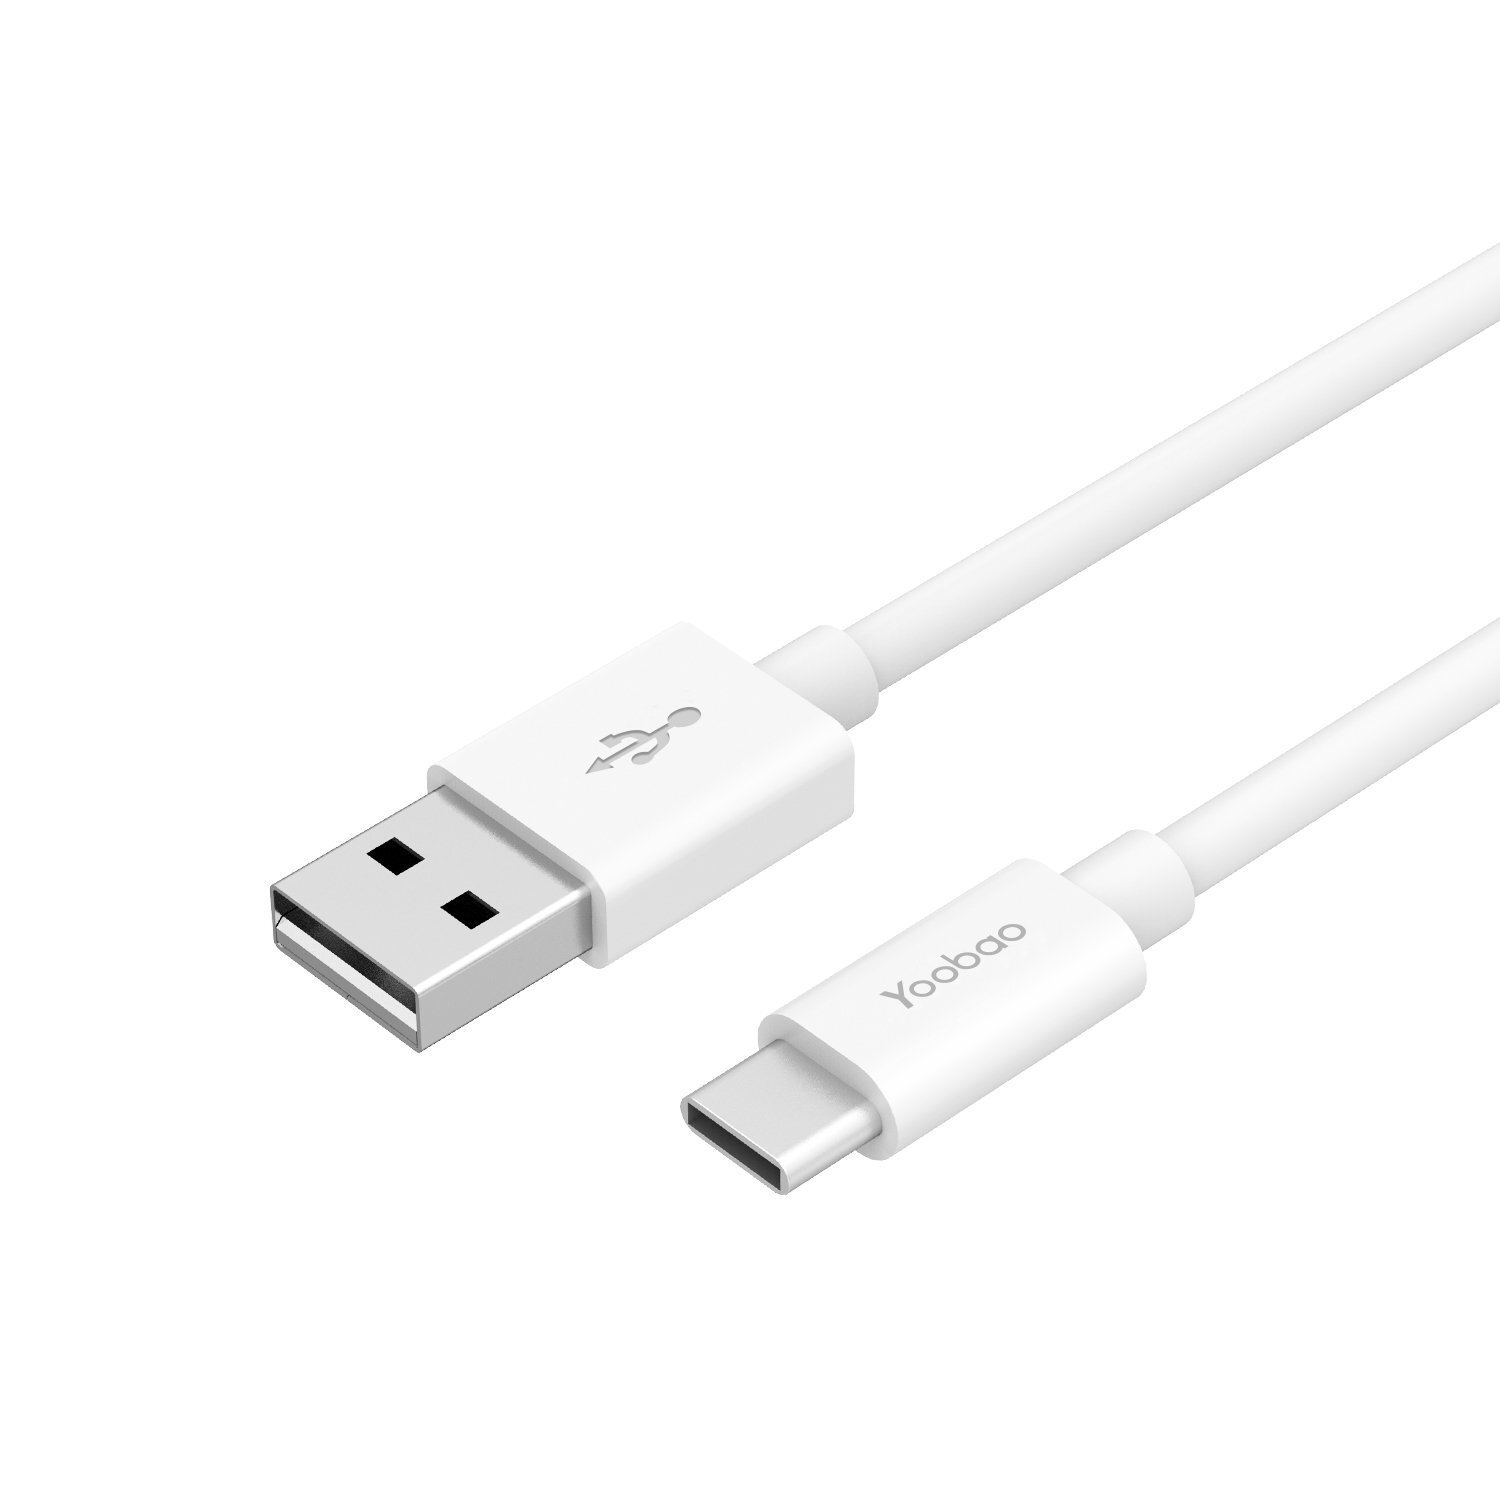 Цена тайпси. Кабель Type-c / USB Samsung Ep-dg950cbe. Mi USB-C Cable 1m (White). Кабель USB - Type c, x153 2,4 белый Aksberry. Кабель ZMI al701 (белый).